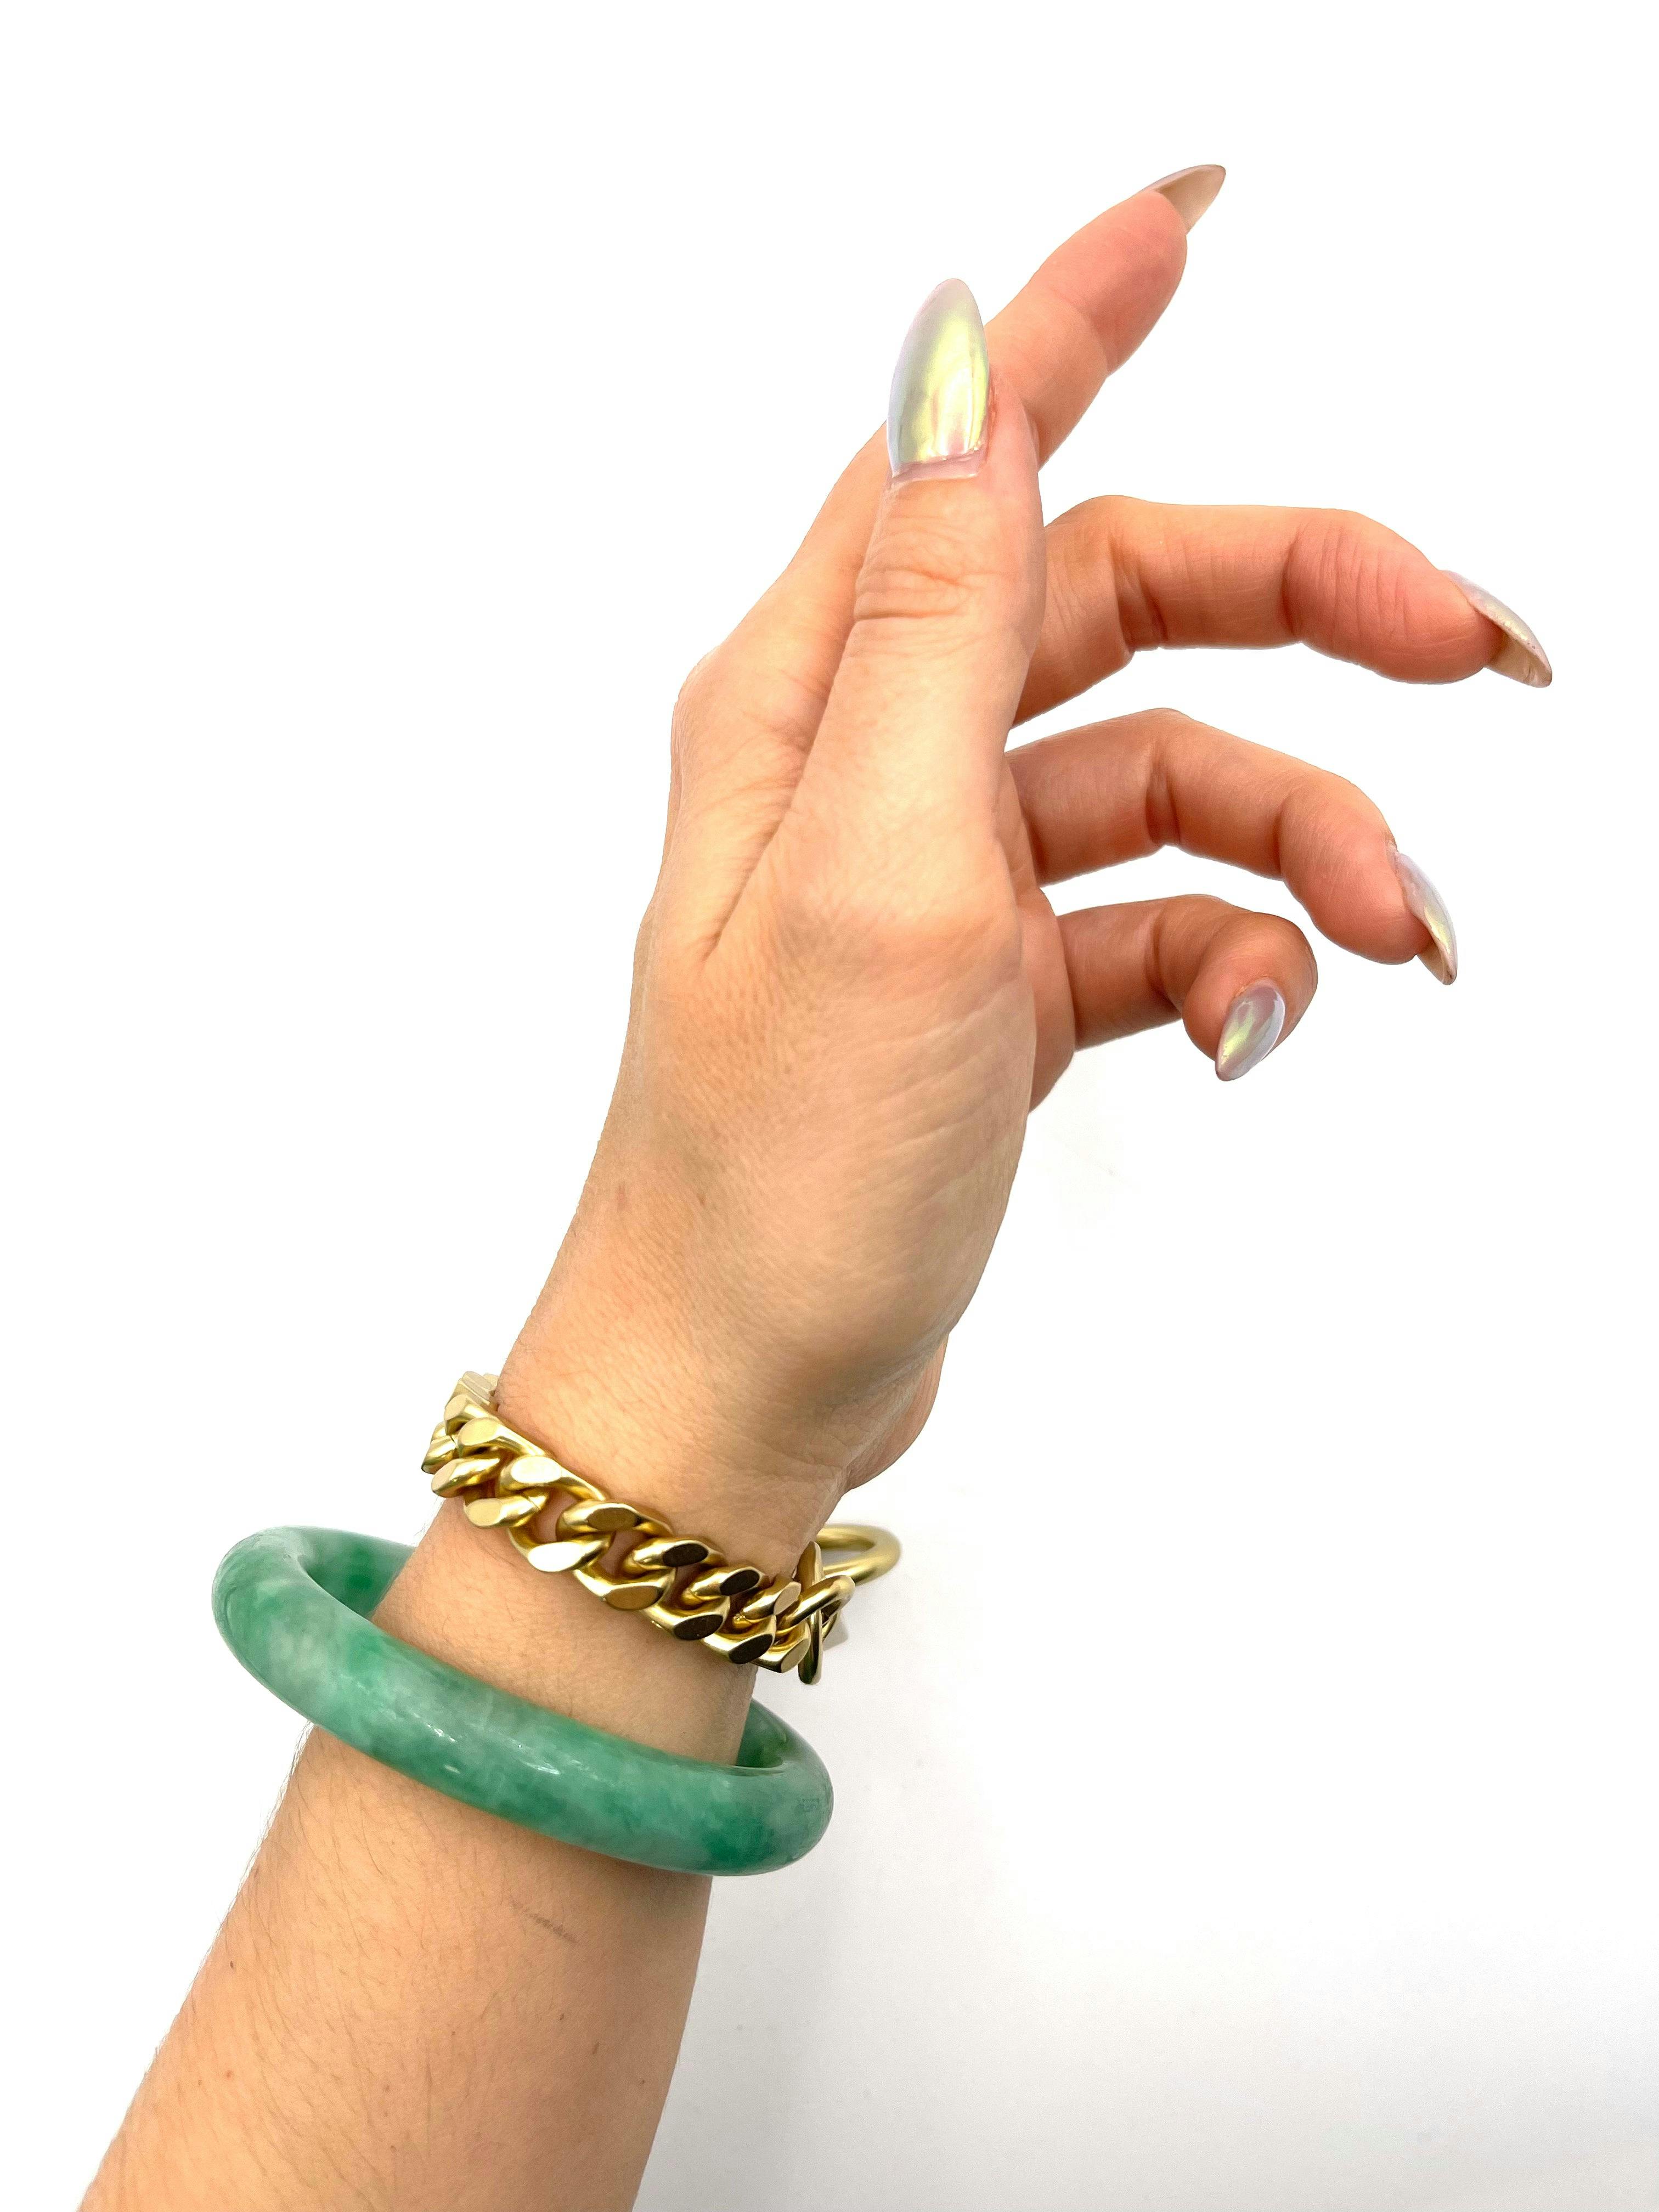 Cuban Link Bracelet (Medium), a product by Ashera Armour